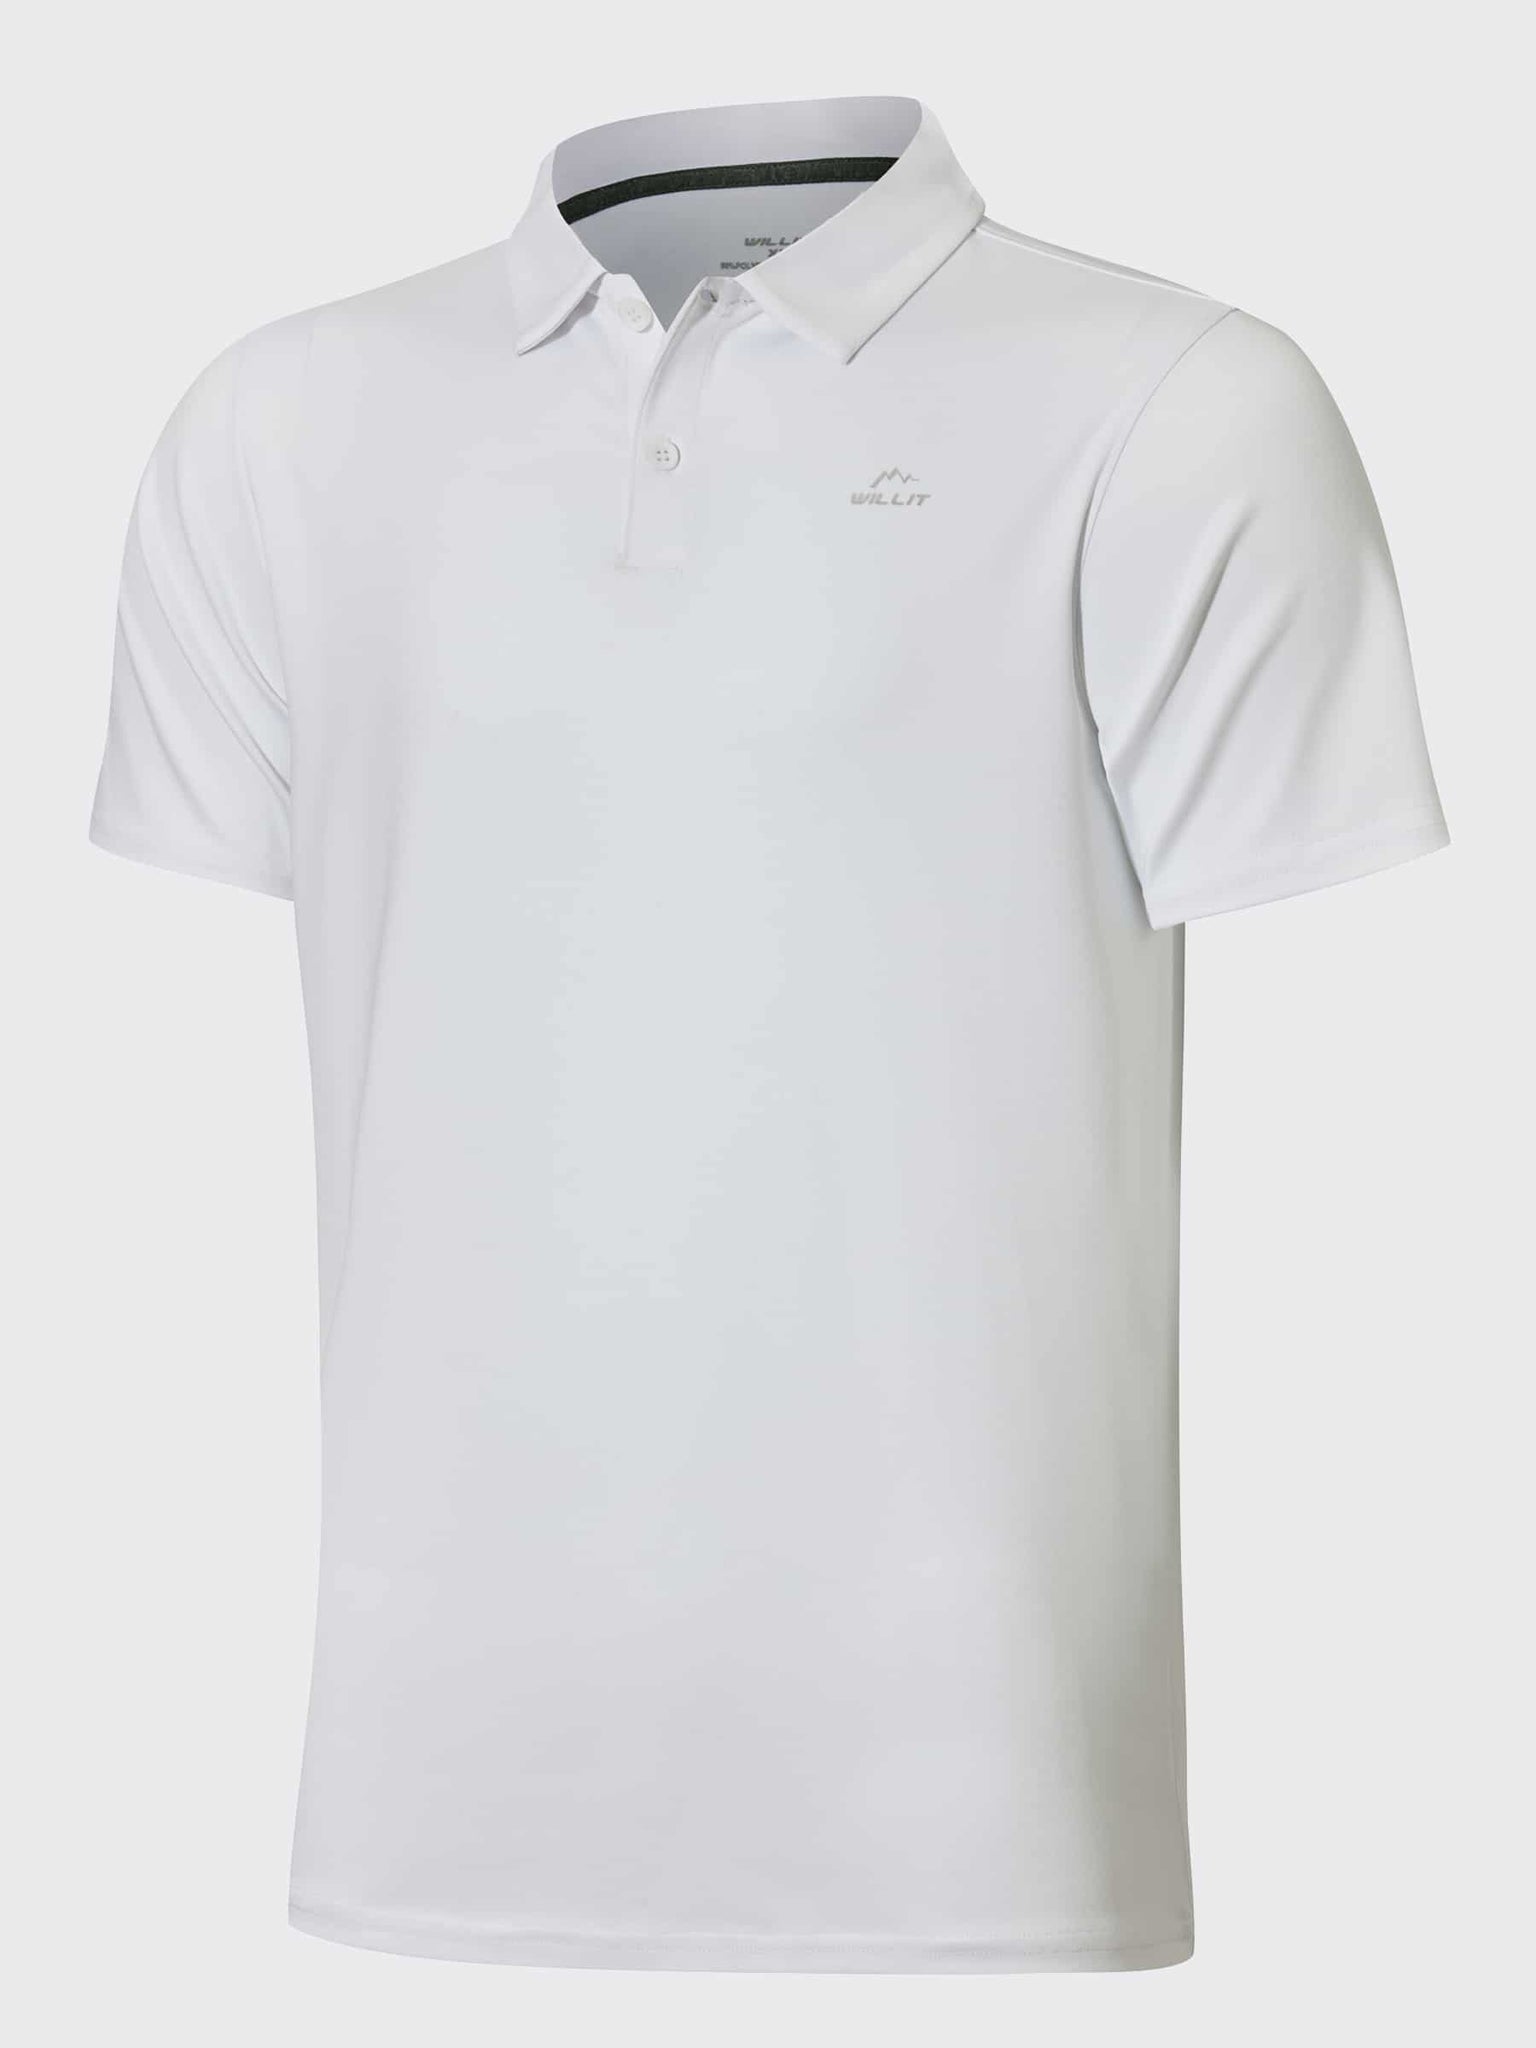 Youth Golf Polo Sun Shirts_White_laydown1